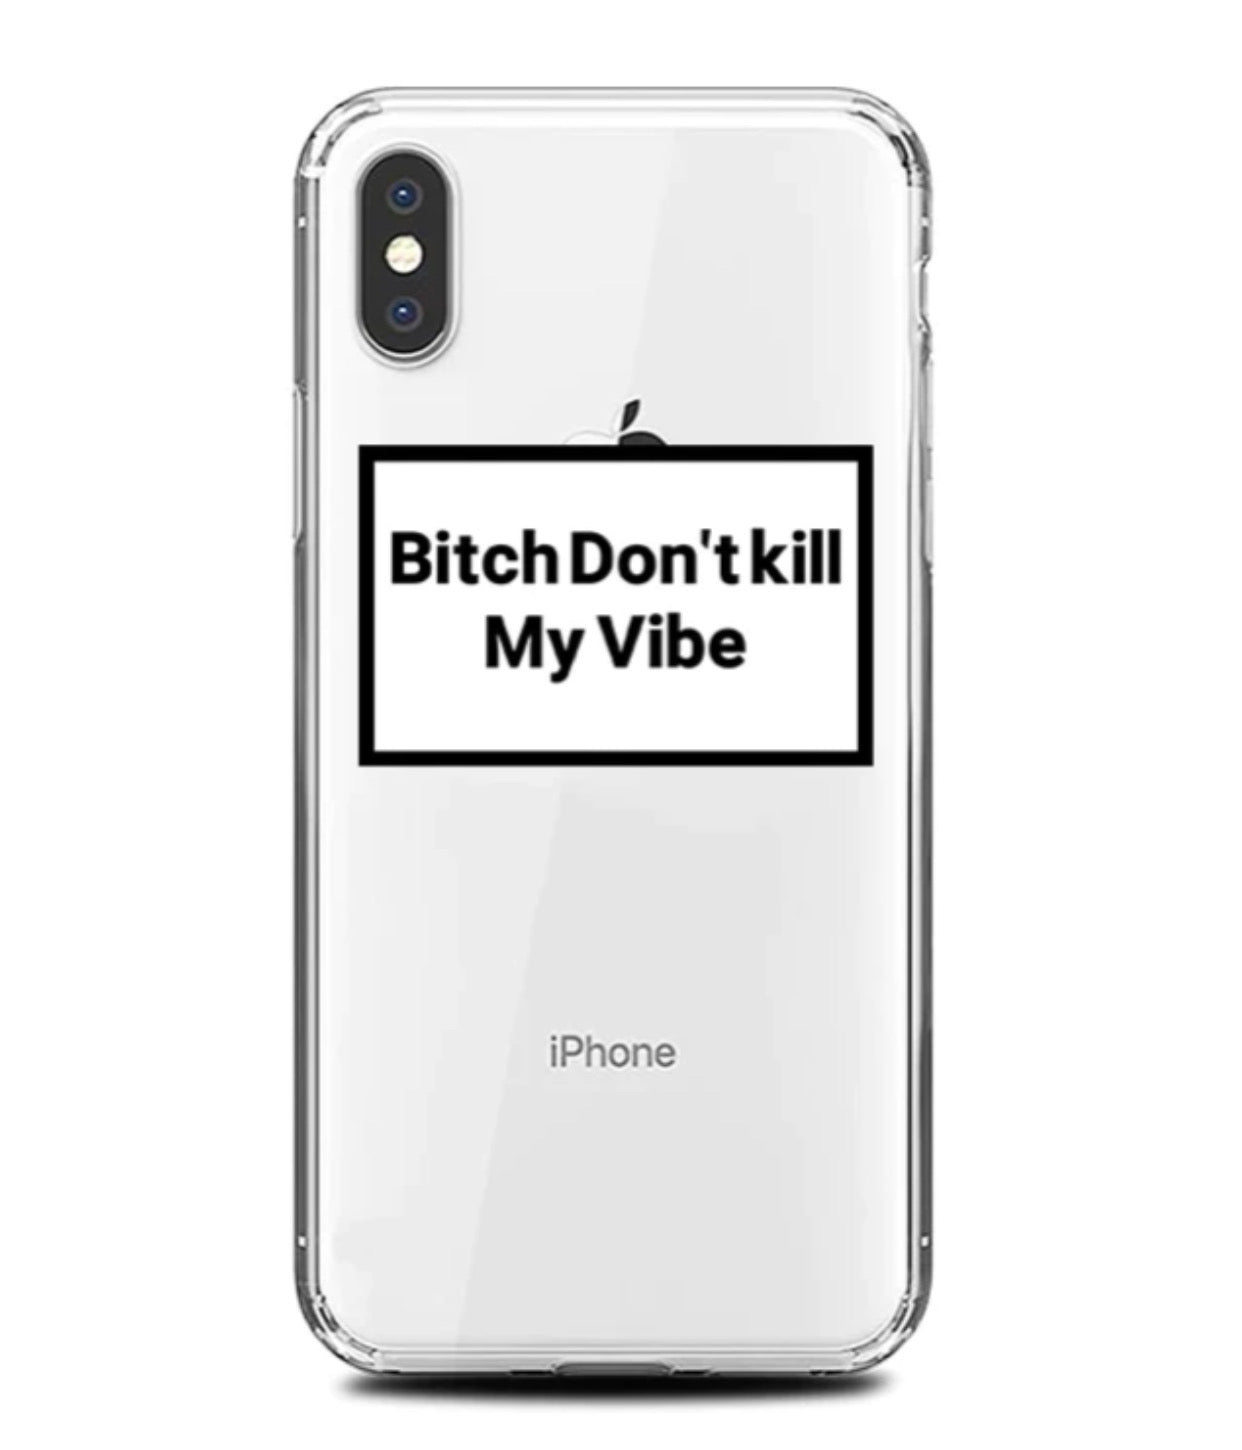 " bitch don't kill my vibe " case